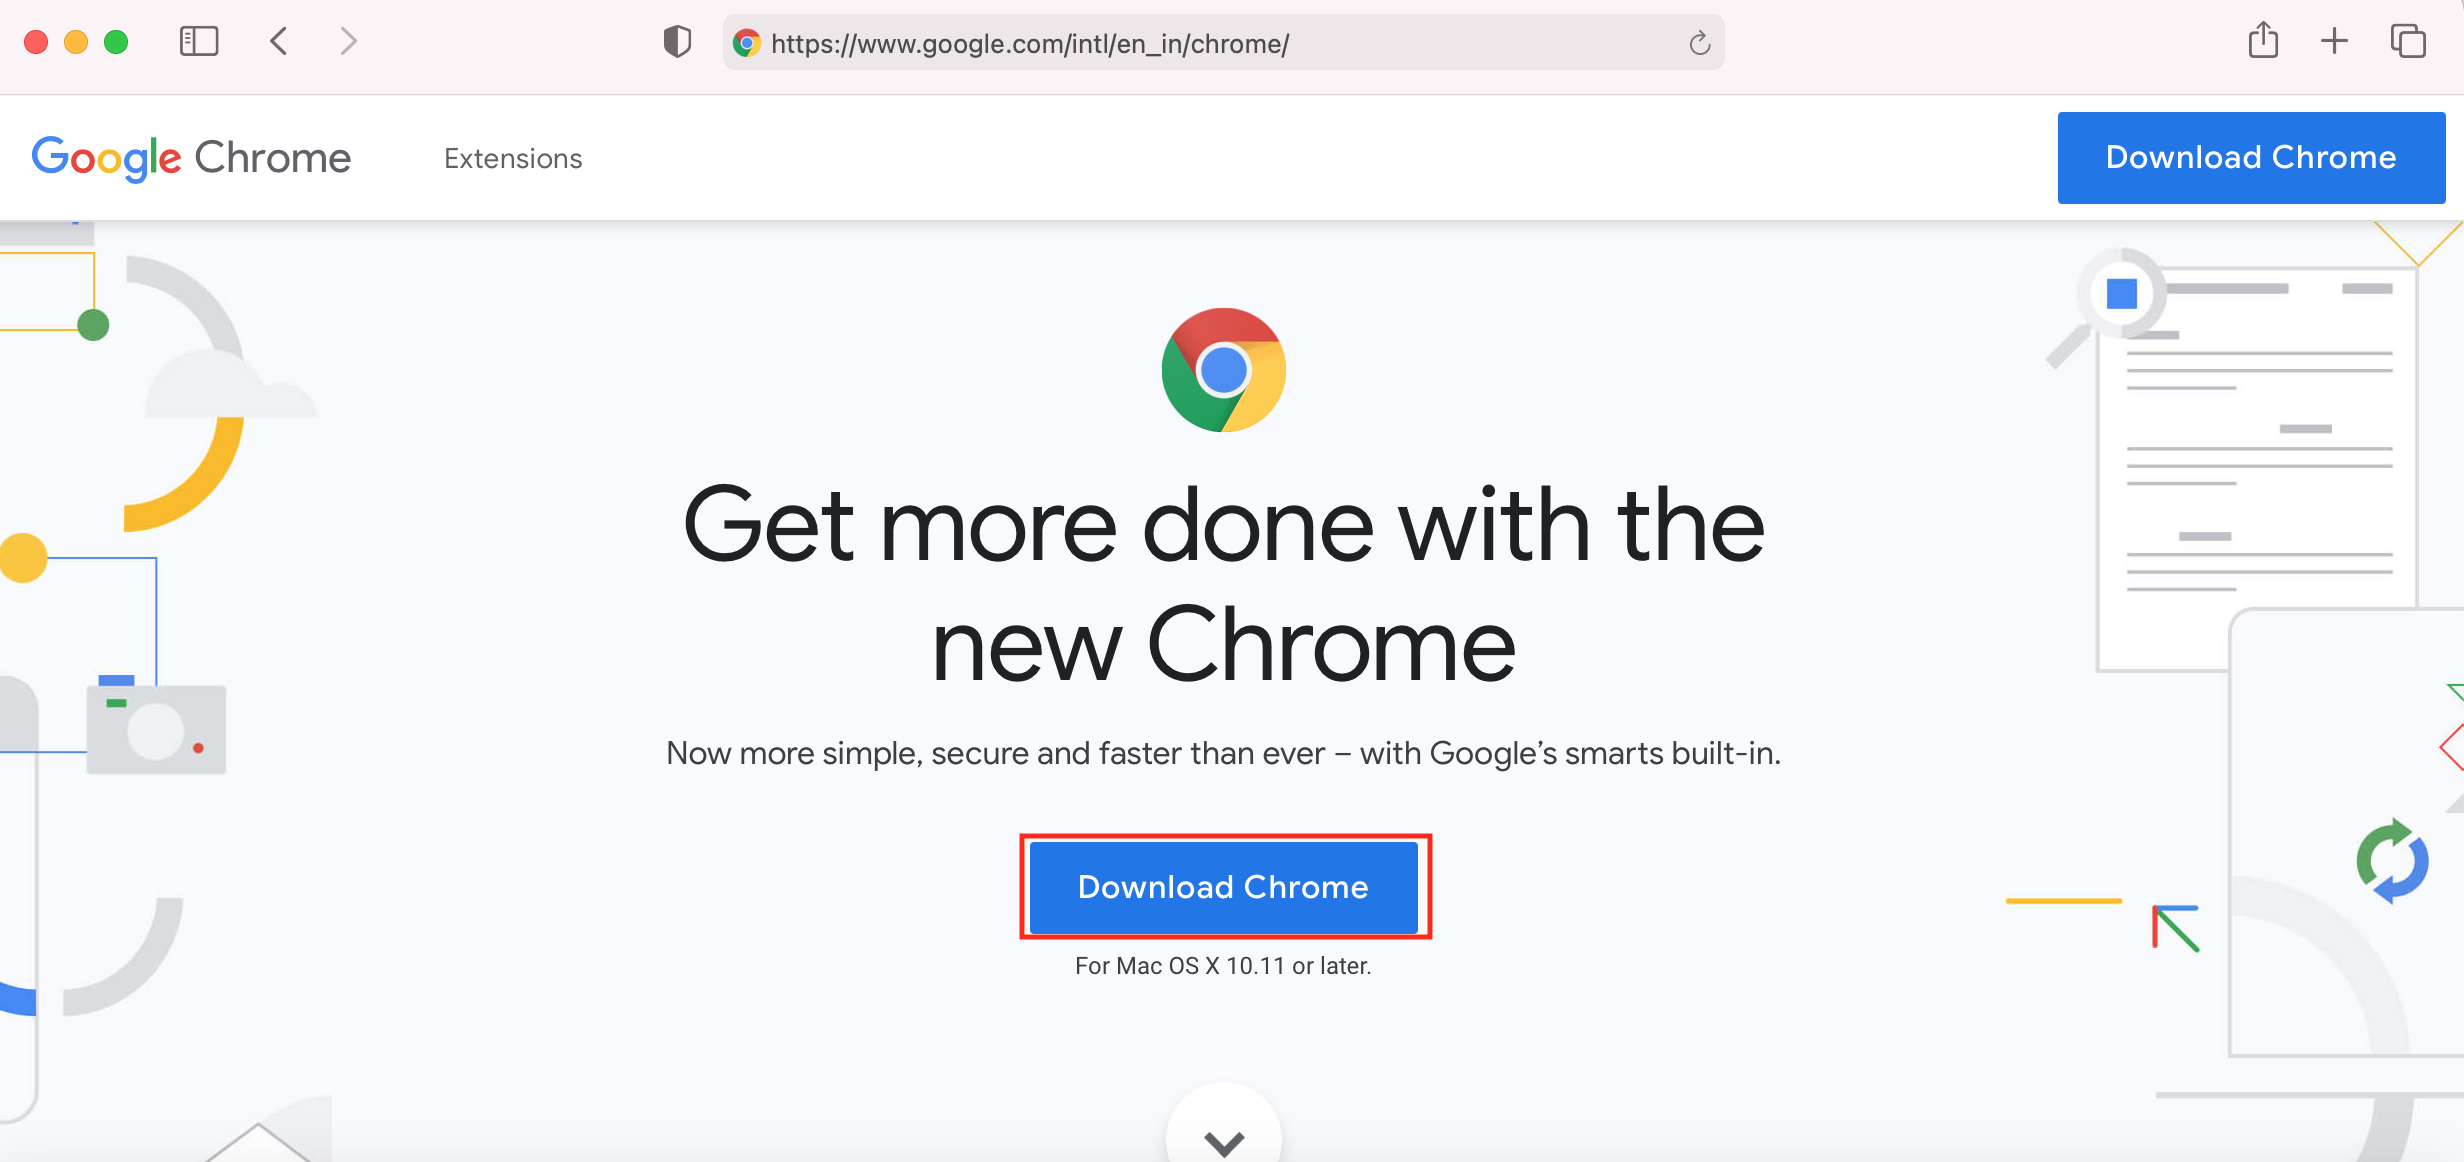 Downlog Google Chrome on Mac